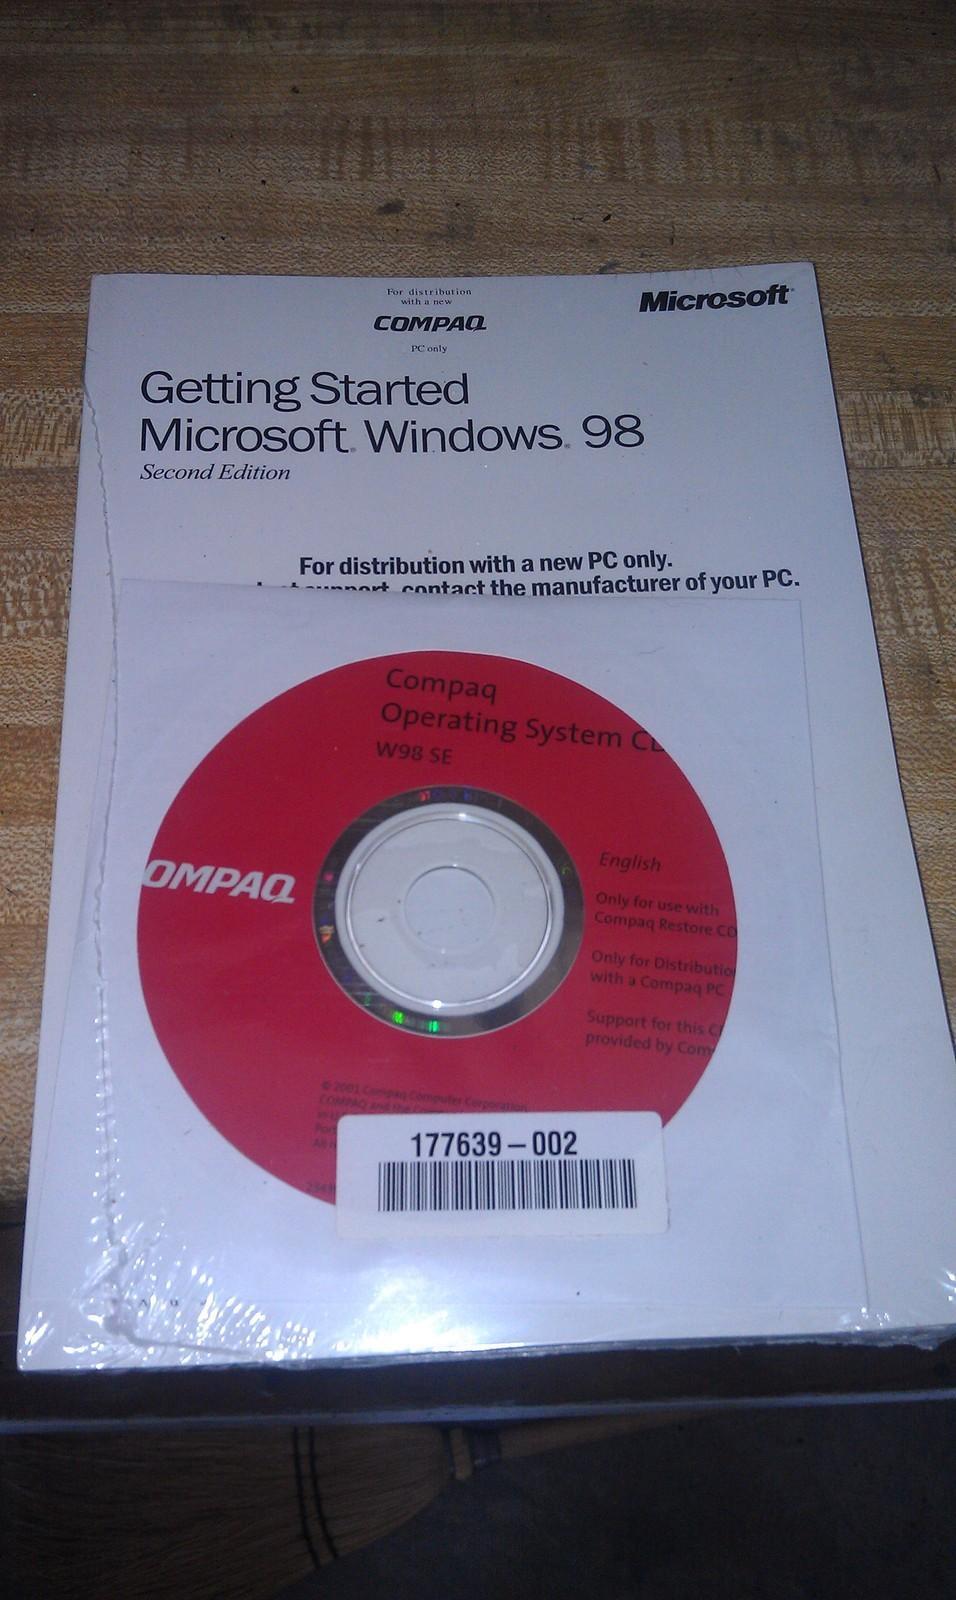 New Compaq Logo - View topic - [REQUEST] Compaq Windows 98 SE OEM Recovery CD ...